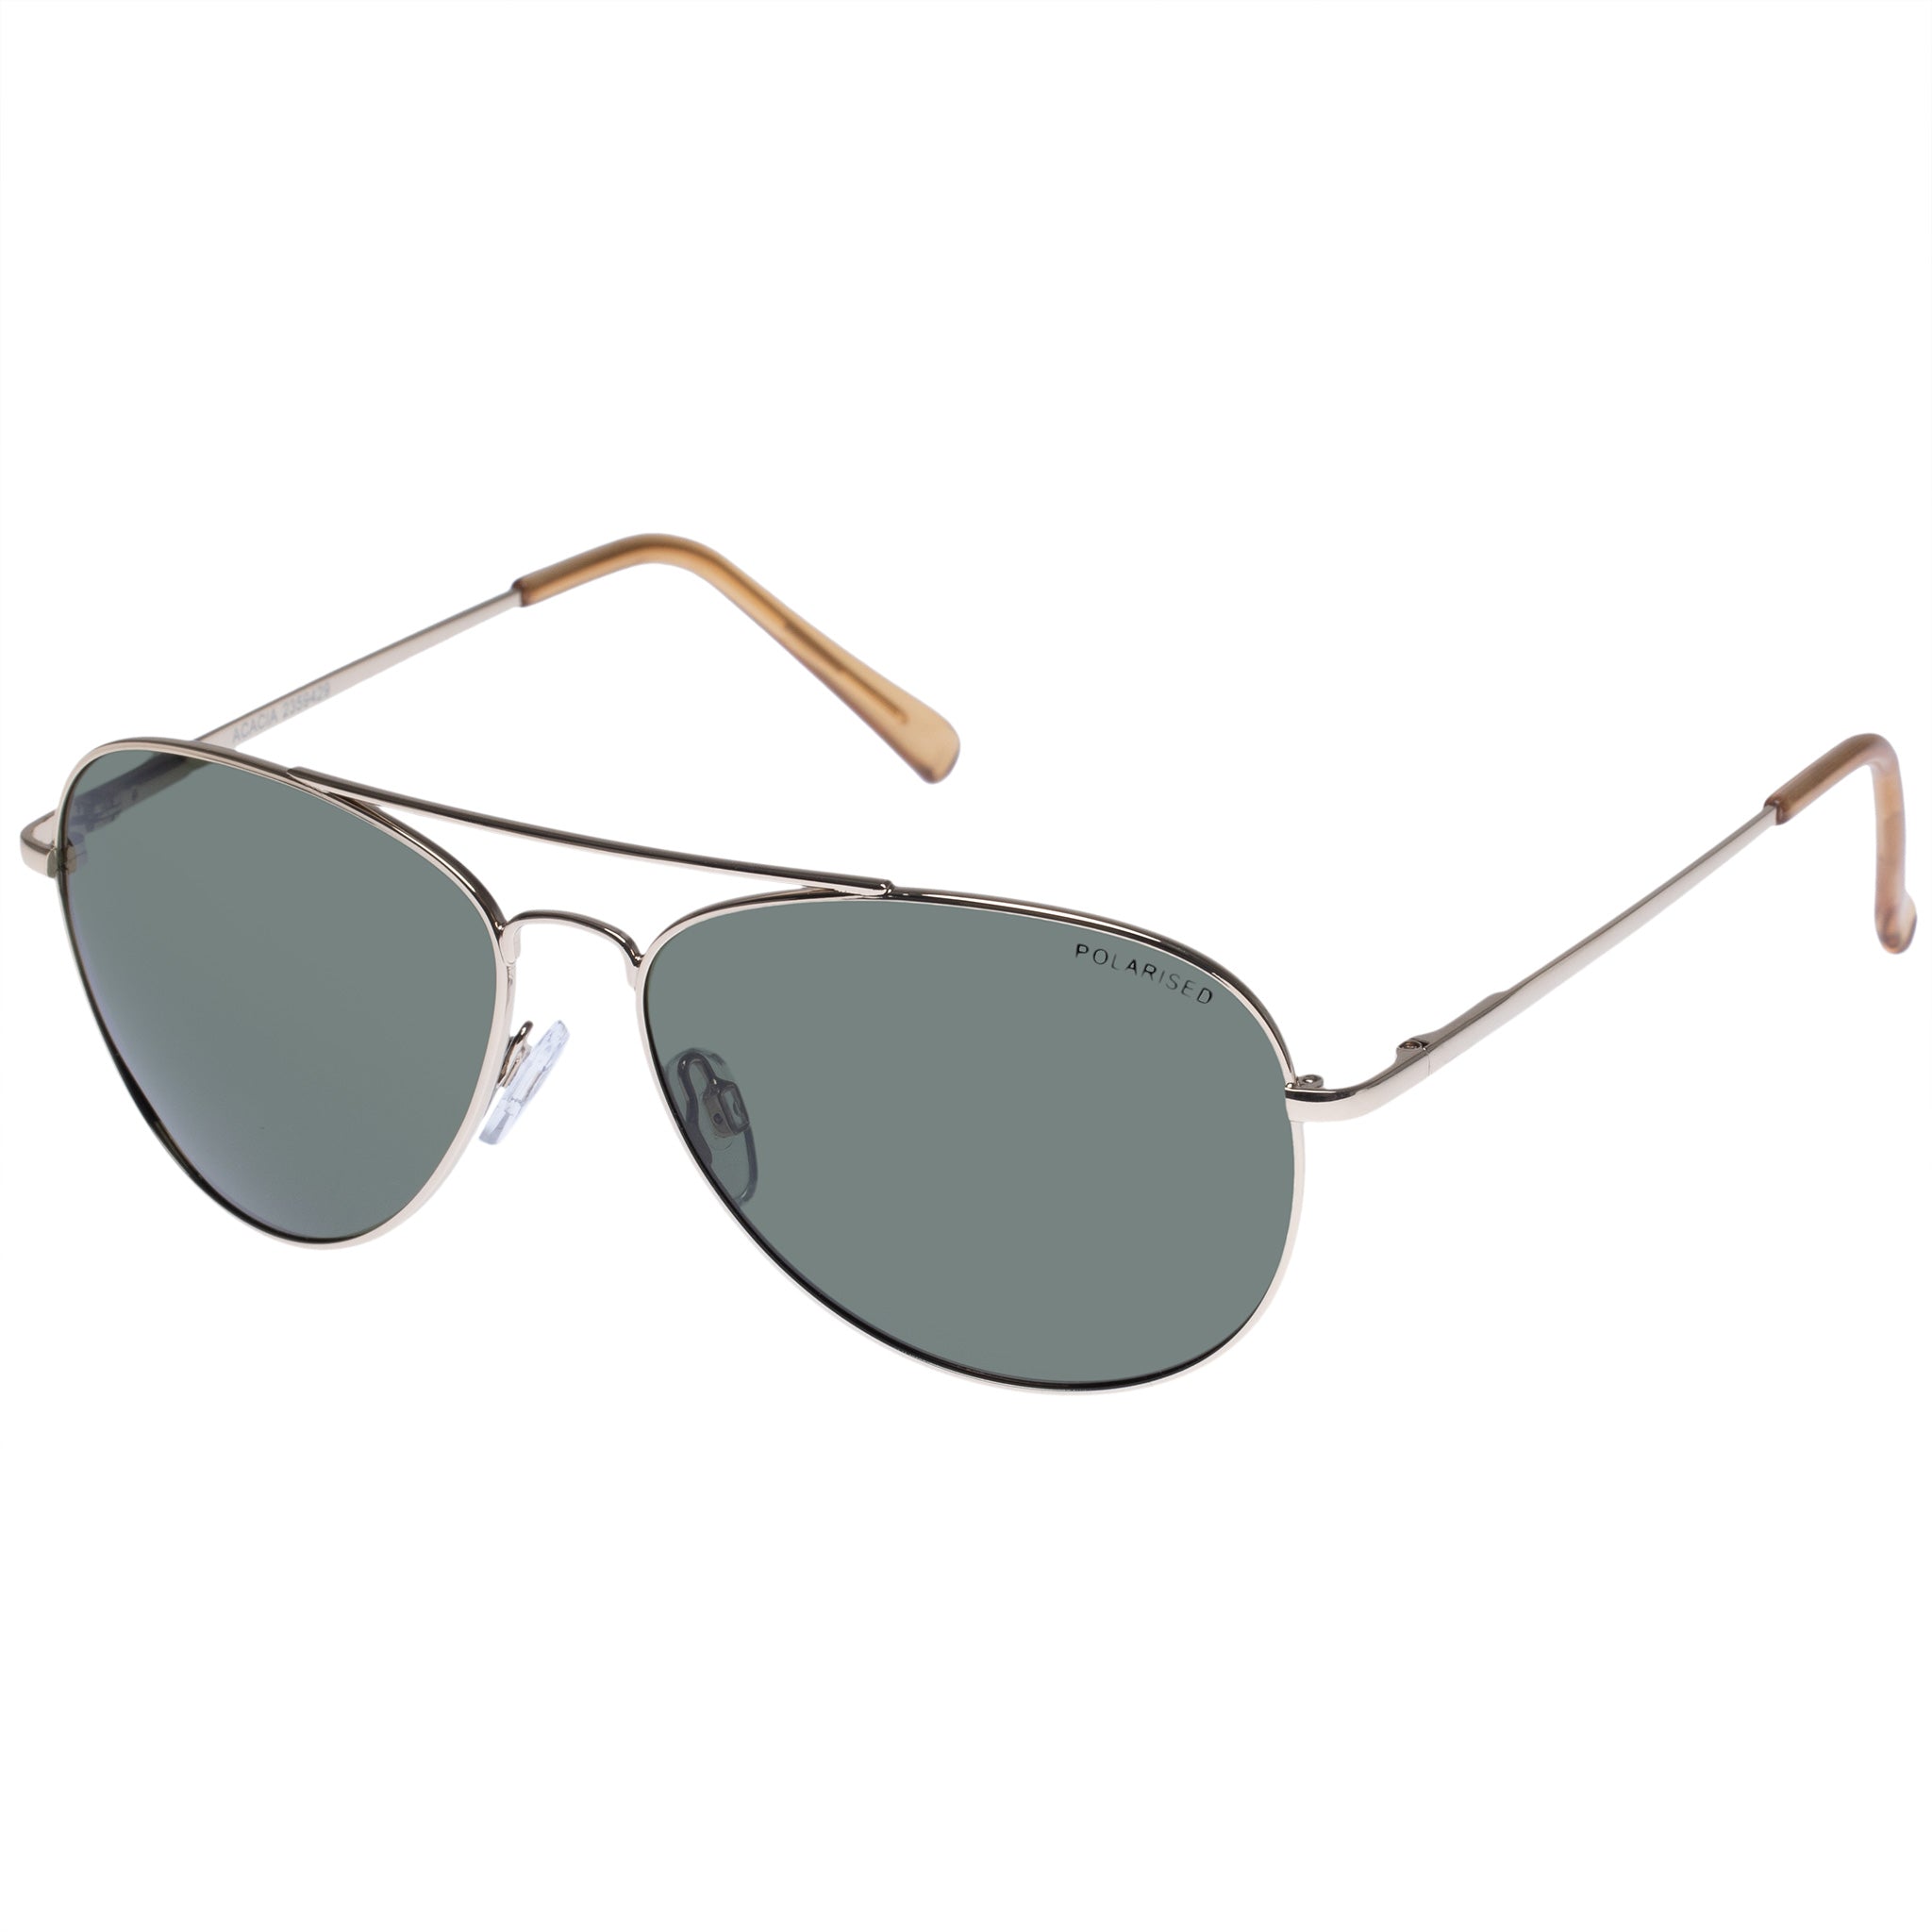 Cancer Council Uni-sex Acacia Gold Aviator Sunglasses | Eyewear Index